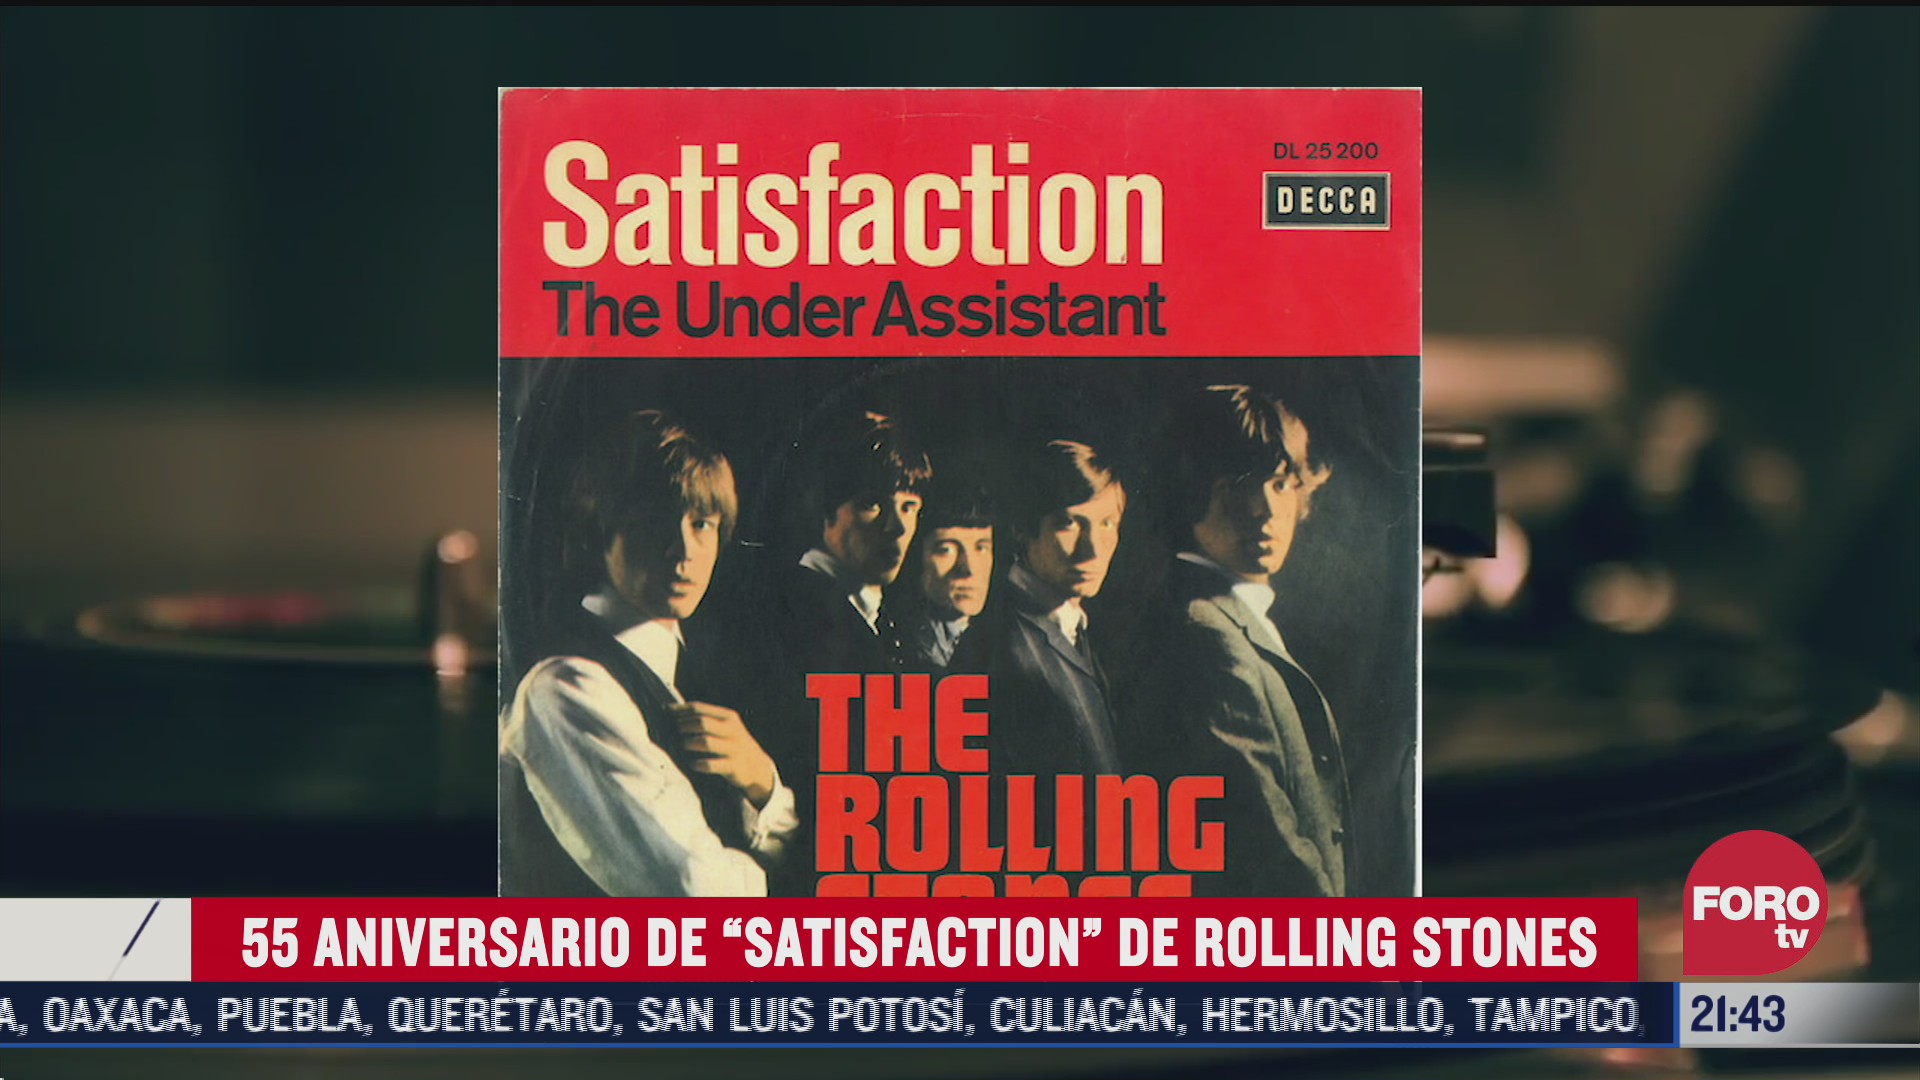 55 aniversario de "satisfaction" The Rolling Stone